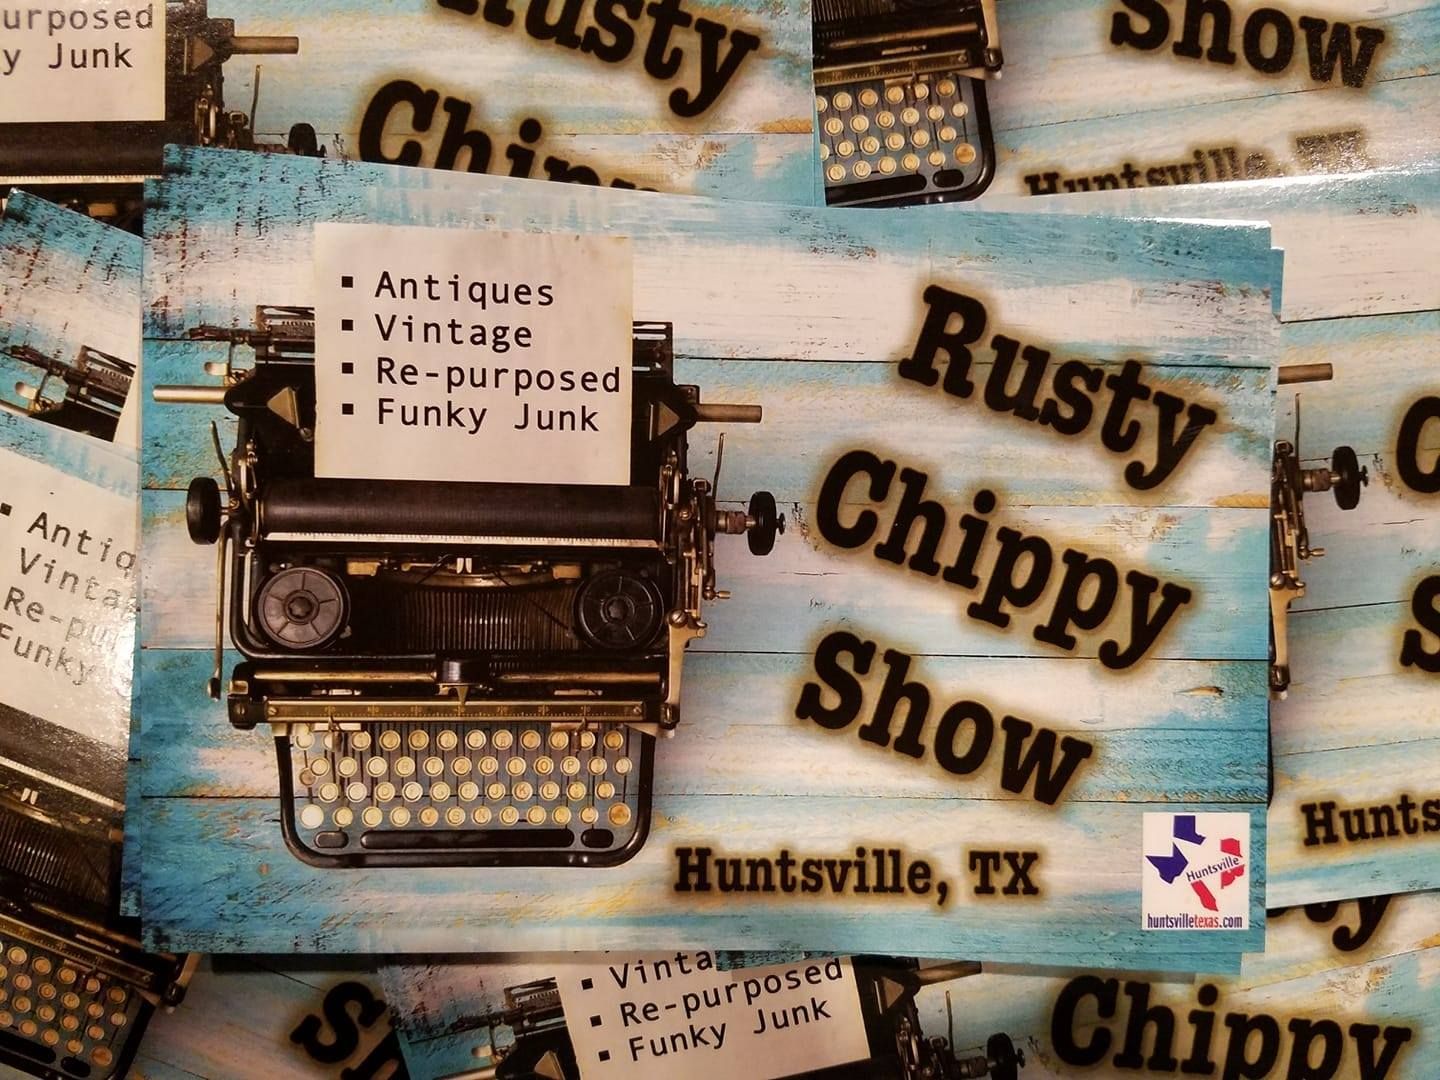 Rusty Chippy Show